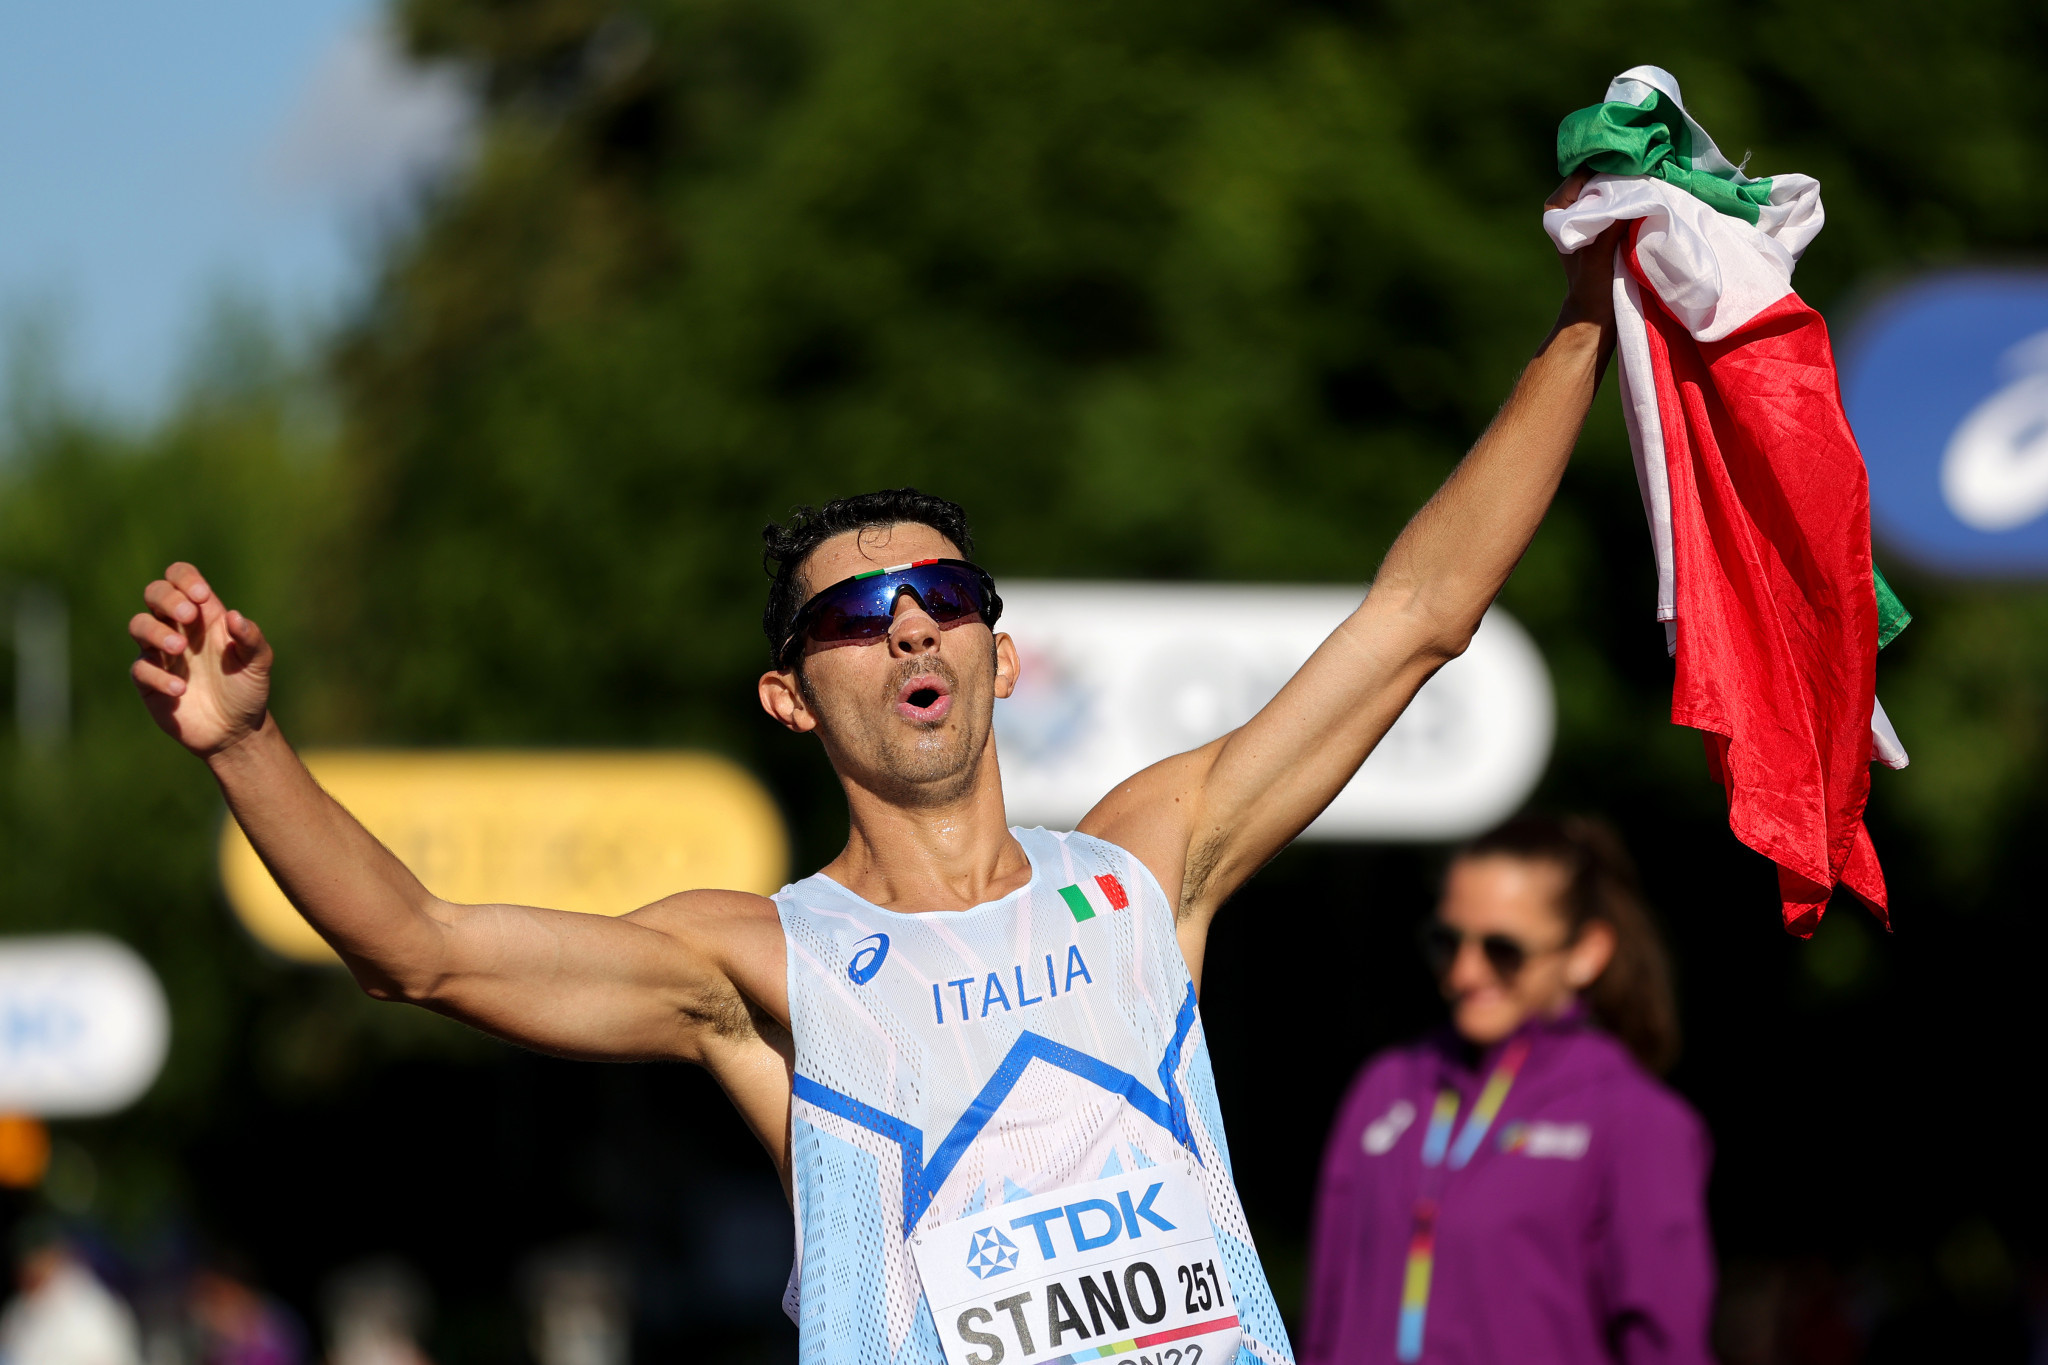 Relentless Stano wins first men's 35km race walk held at World Athletics Championships